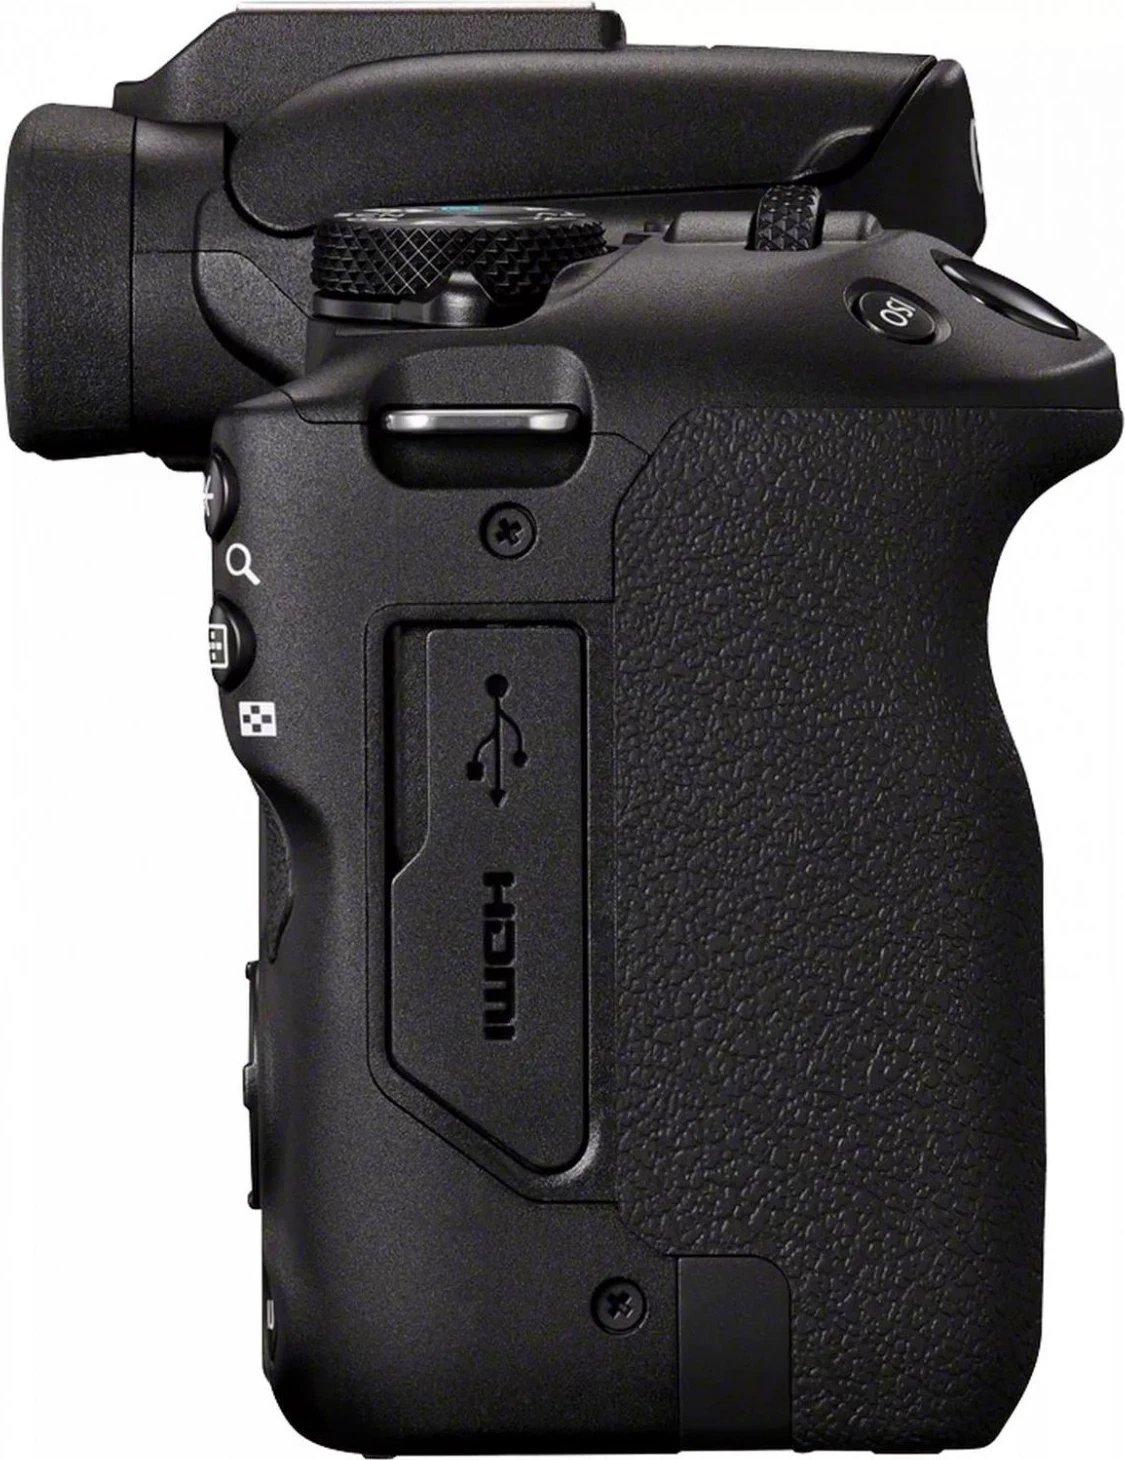 Kamerë Canon EOS R50, me objektiv RF-S 18-45mm IS STM dhe RF-S 55-210mm IS STM, e zezë